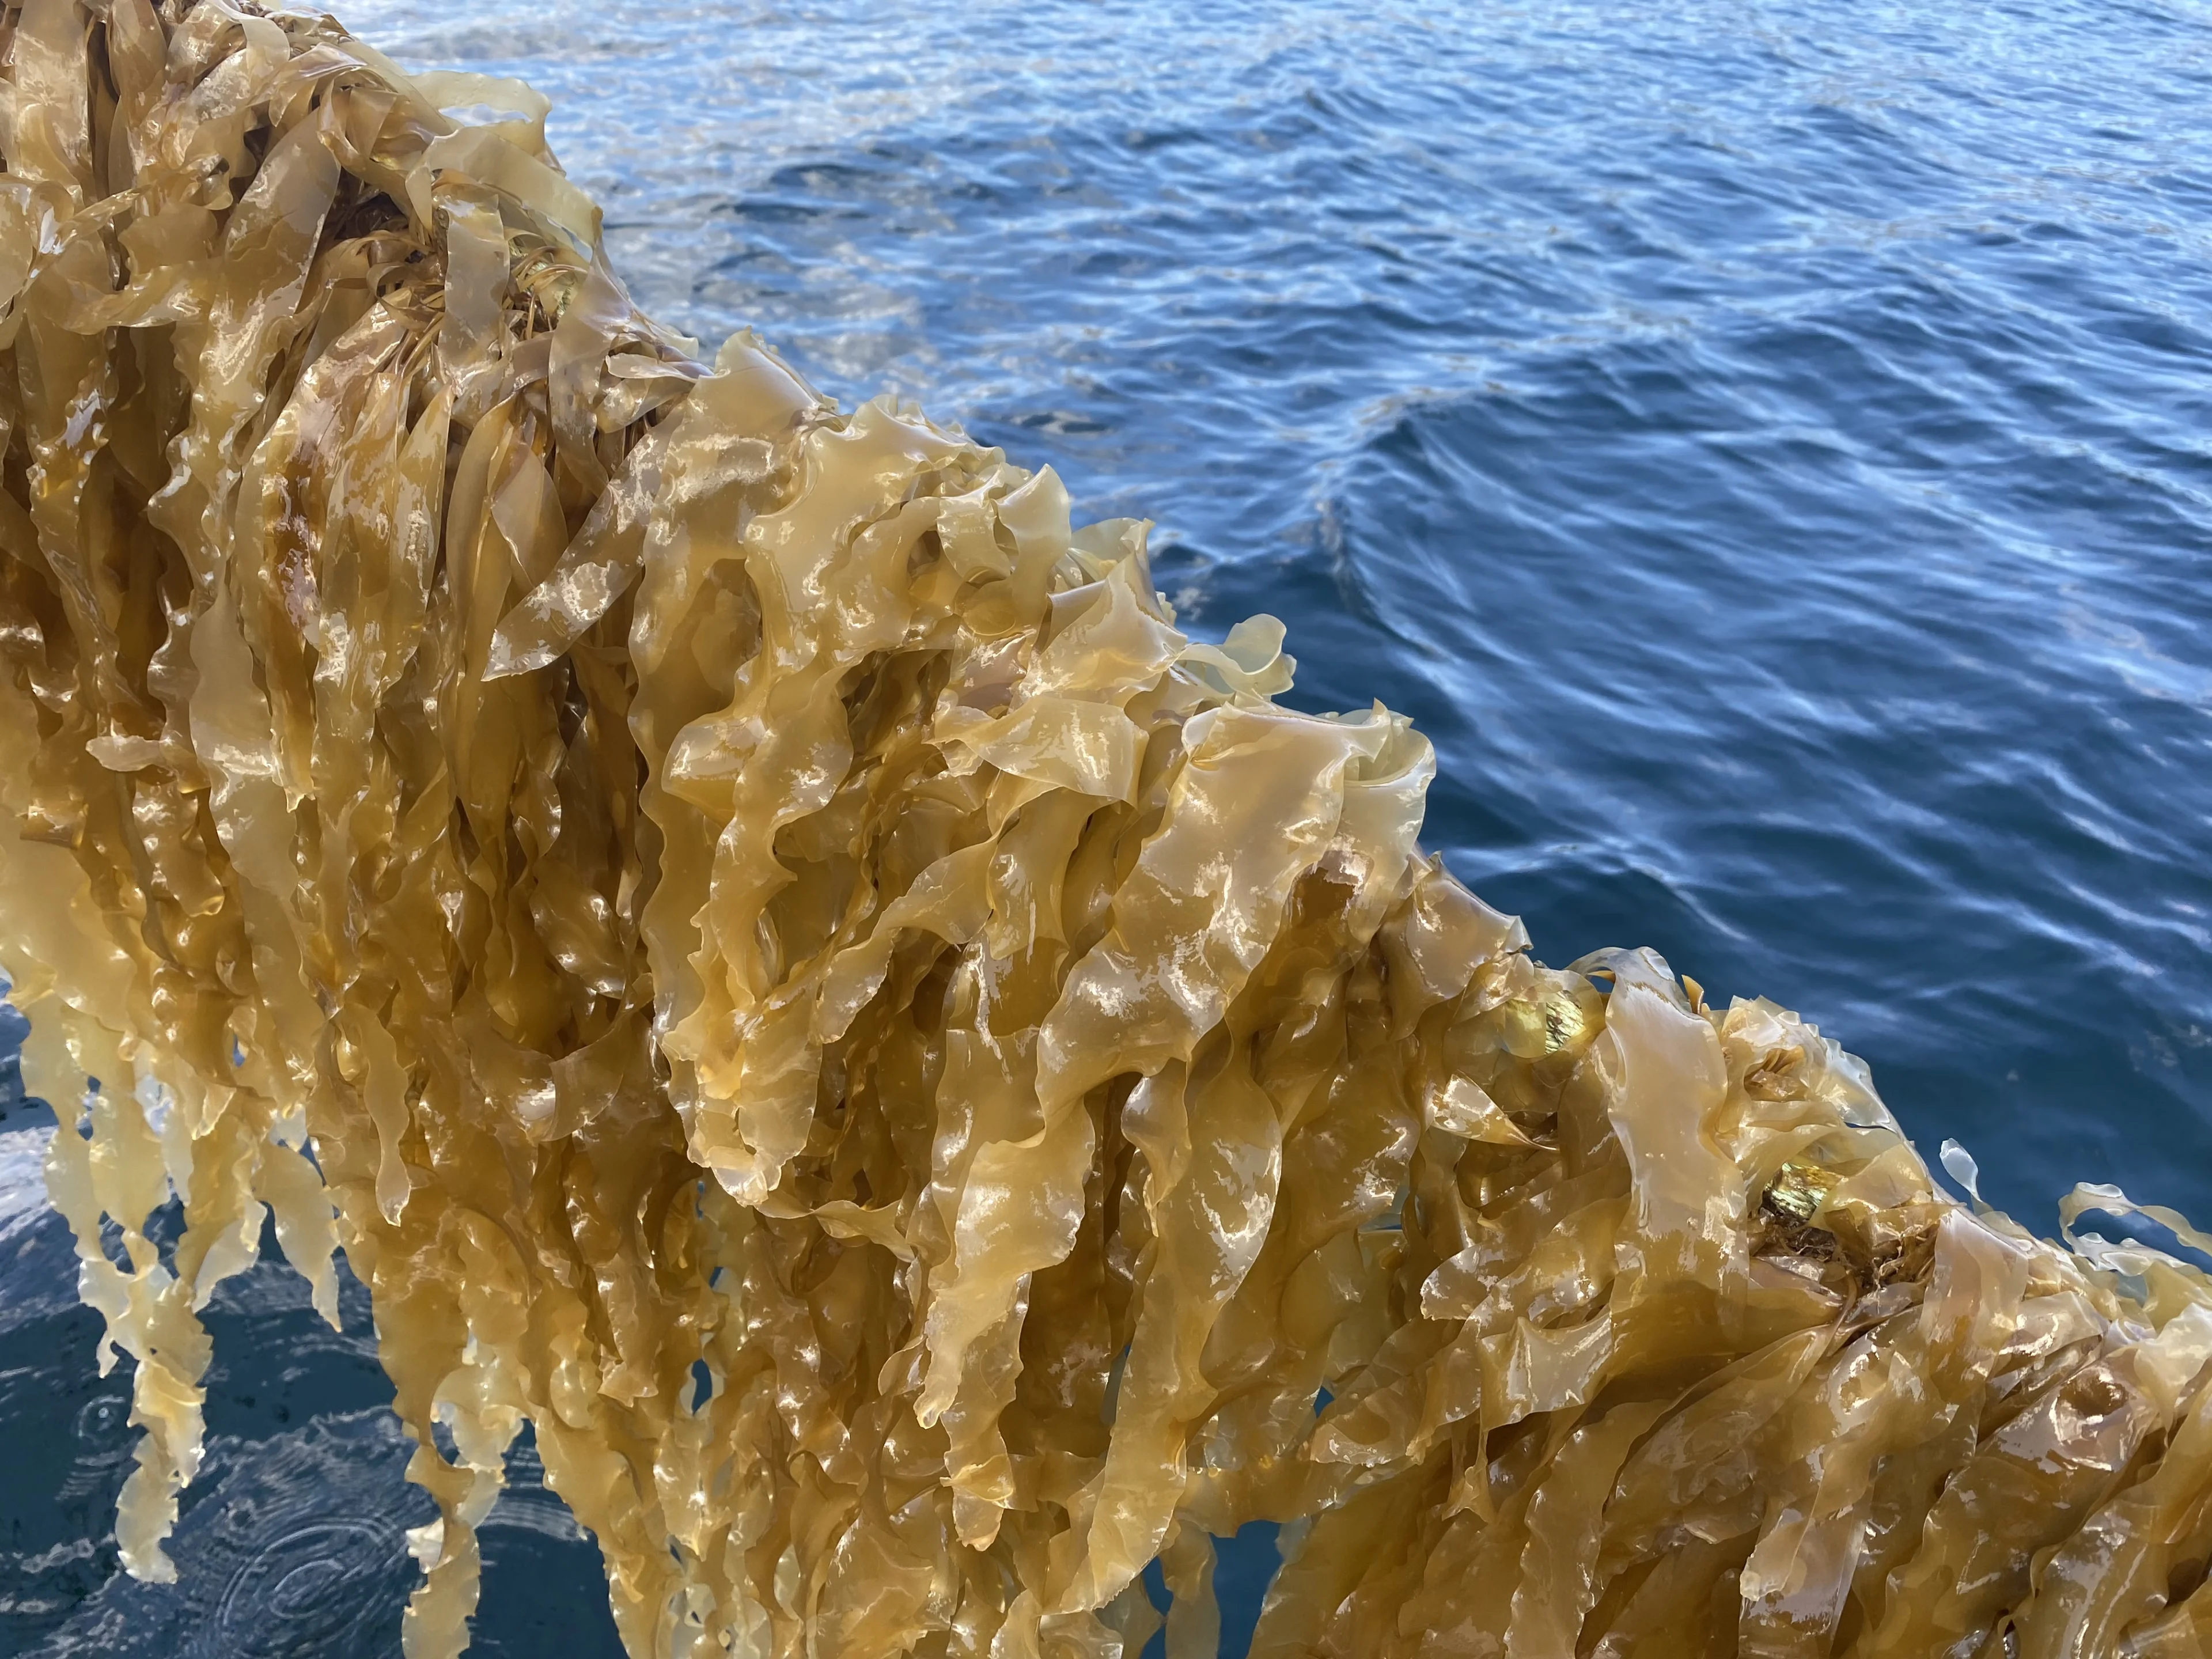 Kelp Wanted: Interest in kelp farming grows in Atlantic Canada